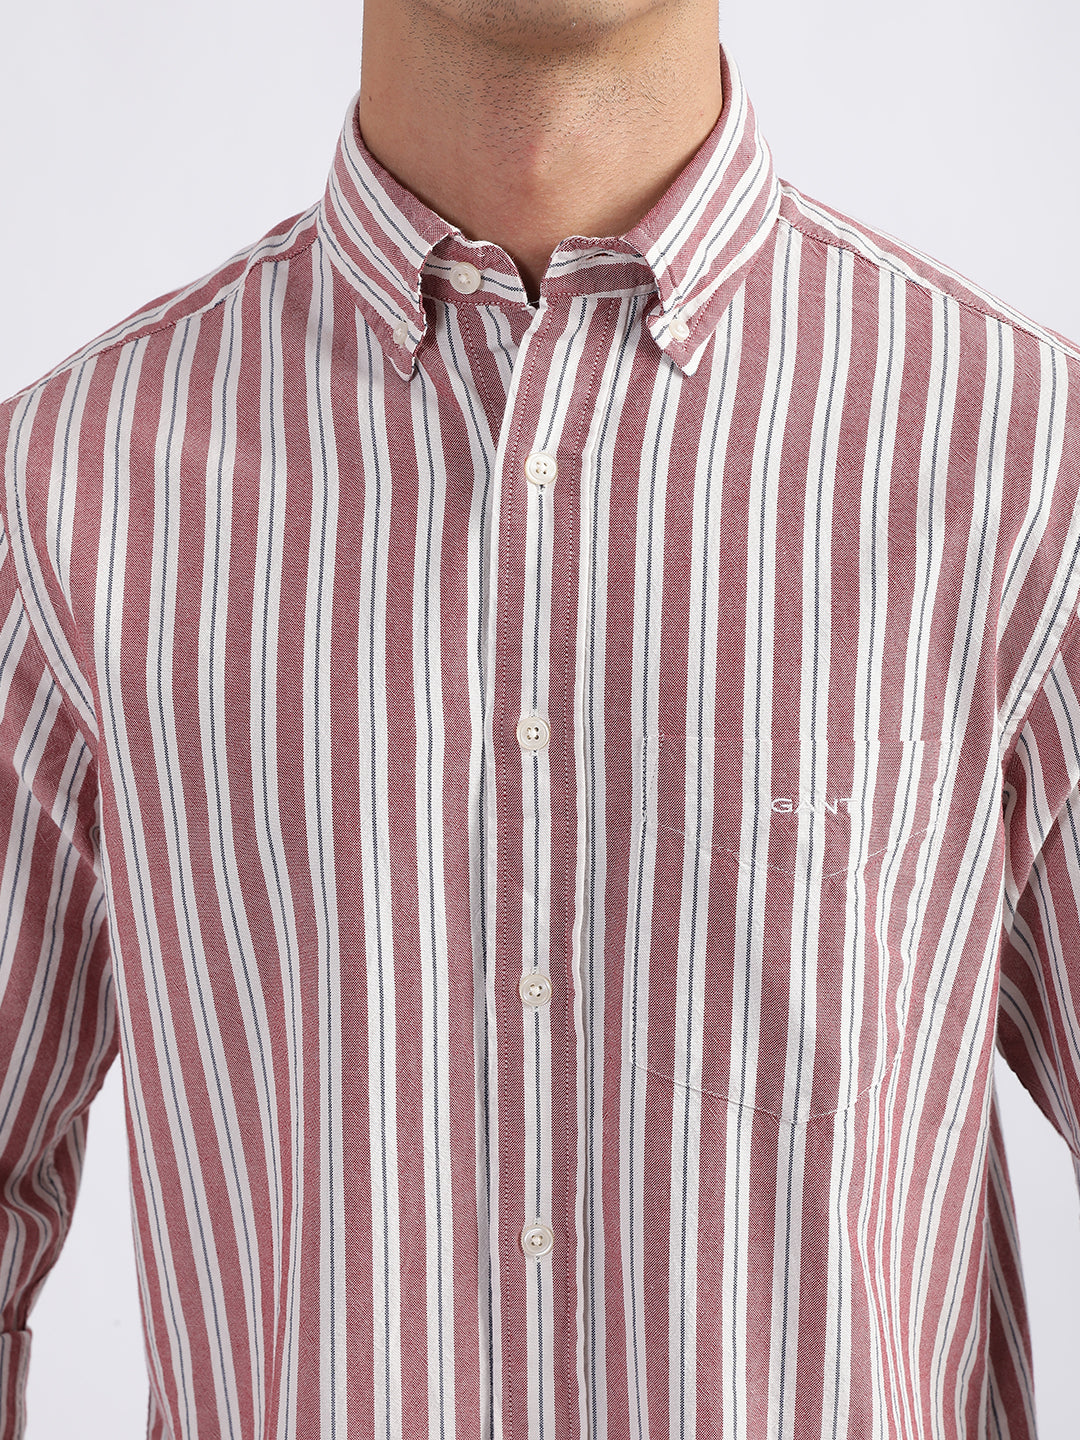 Gant Red Striped Regular Fit Shirt